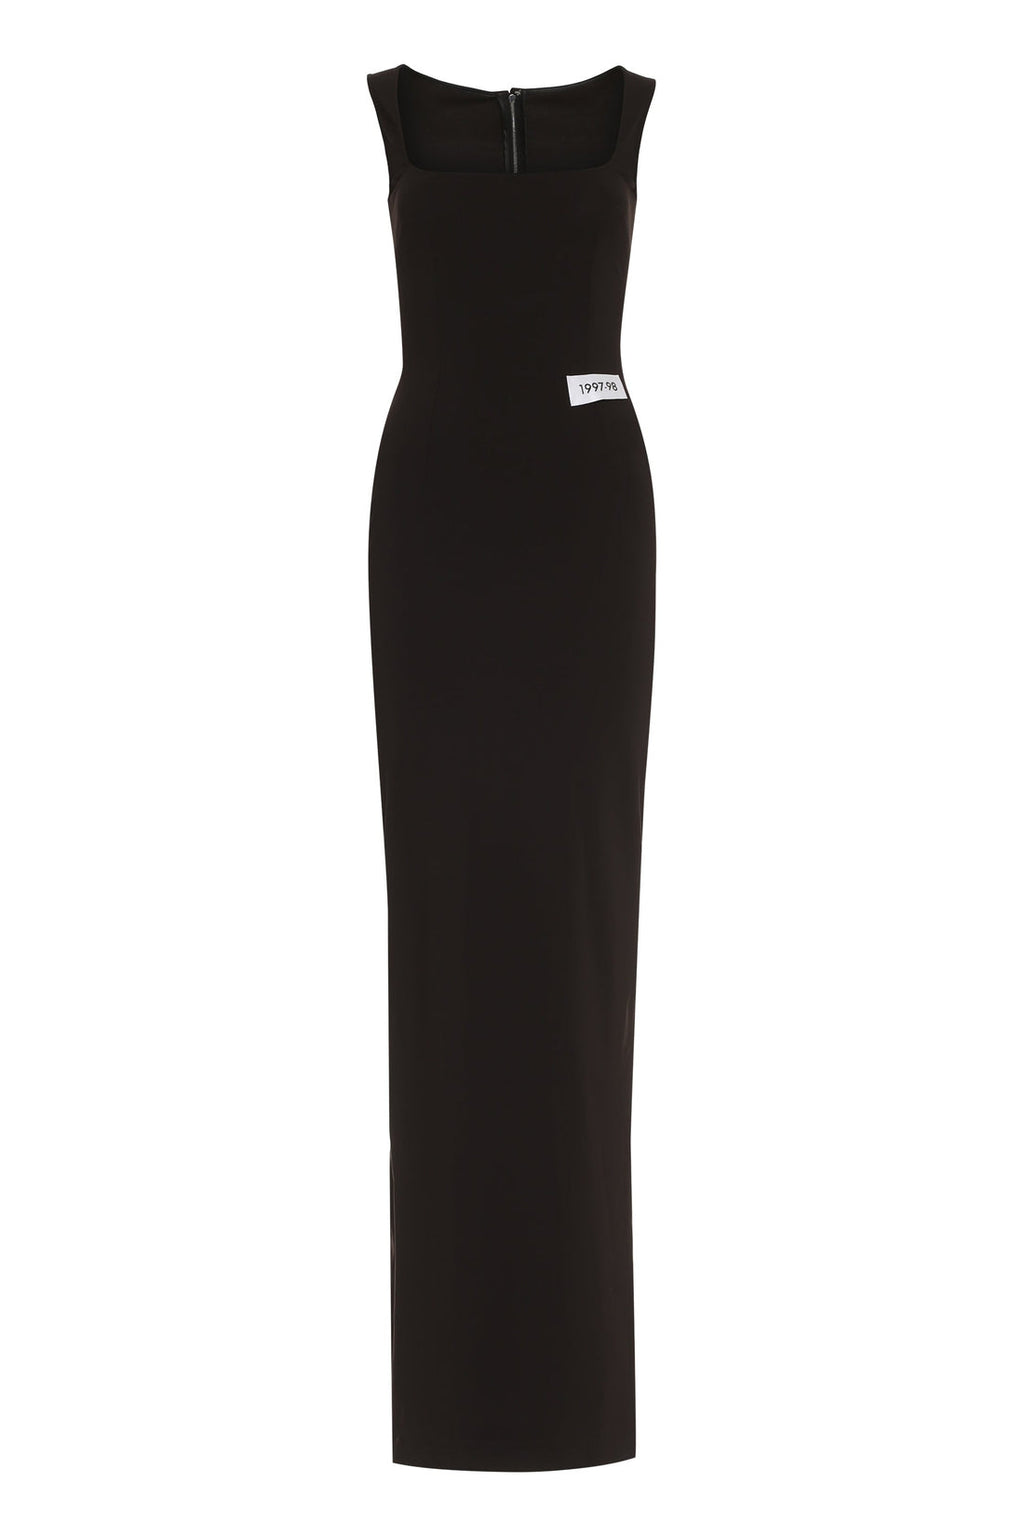 Dolce & Gabbana-OUTLET-SALE-Long dress in stretch jersey-ARCHIVIST